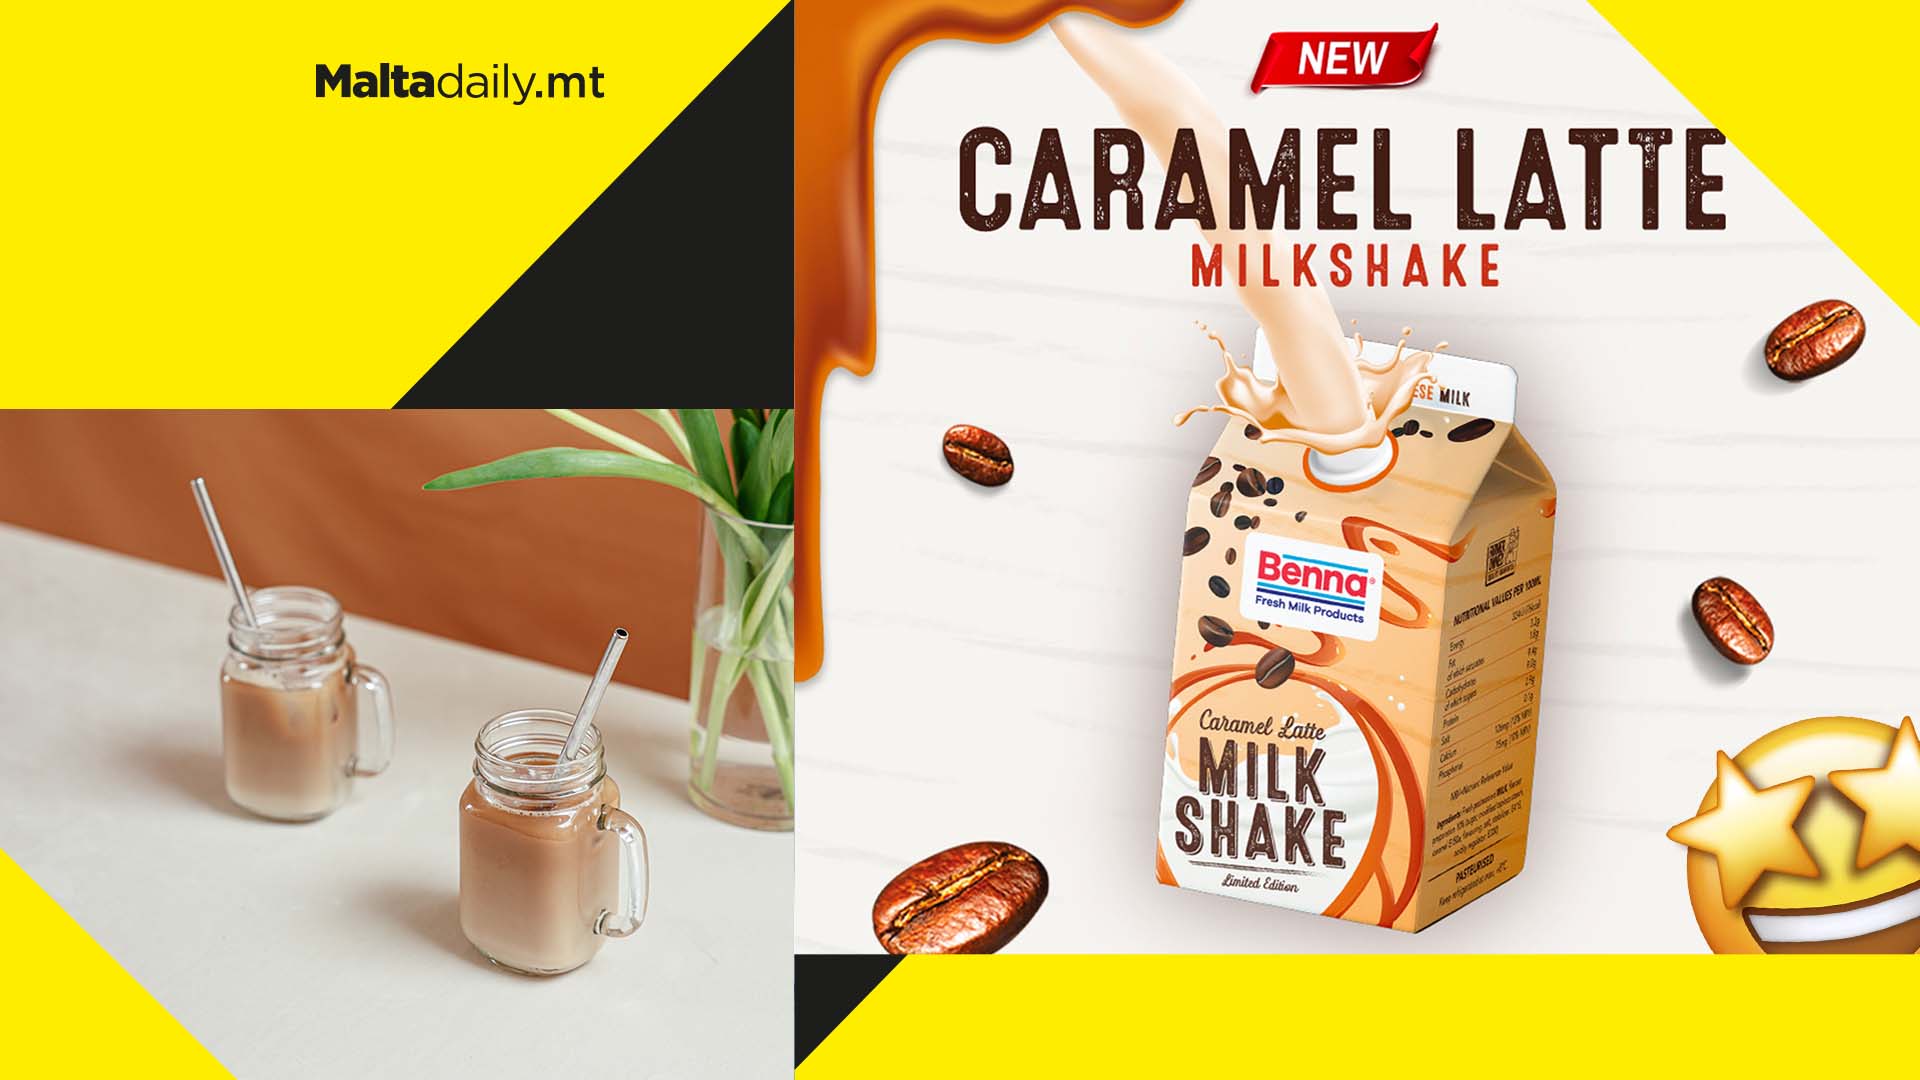 CaraMELA! Benna just launched their Limited Edition Caramel Latte flavoured milkshake